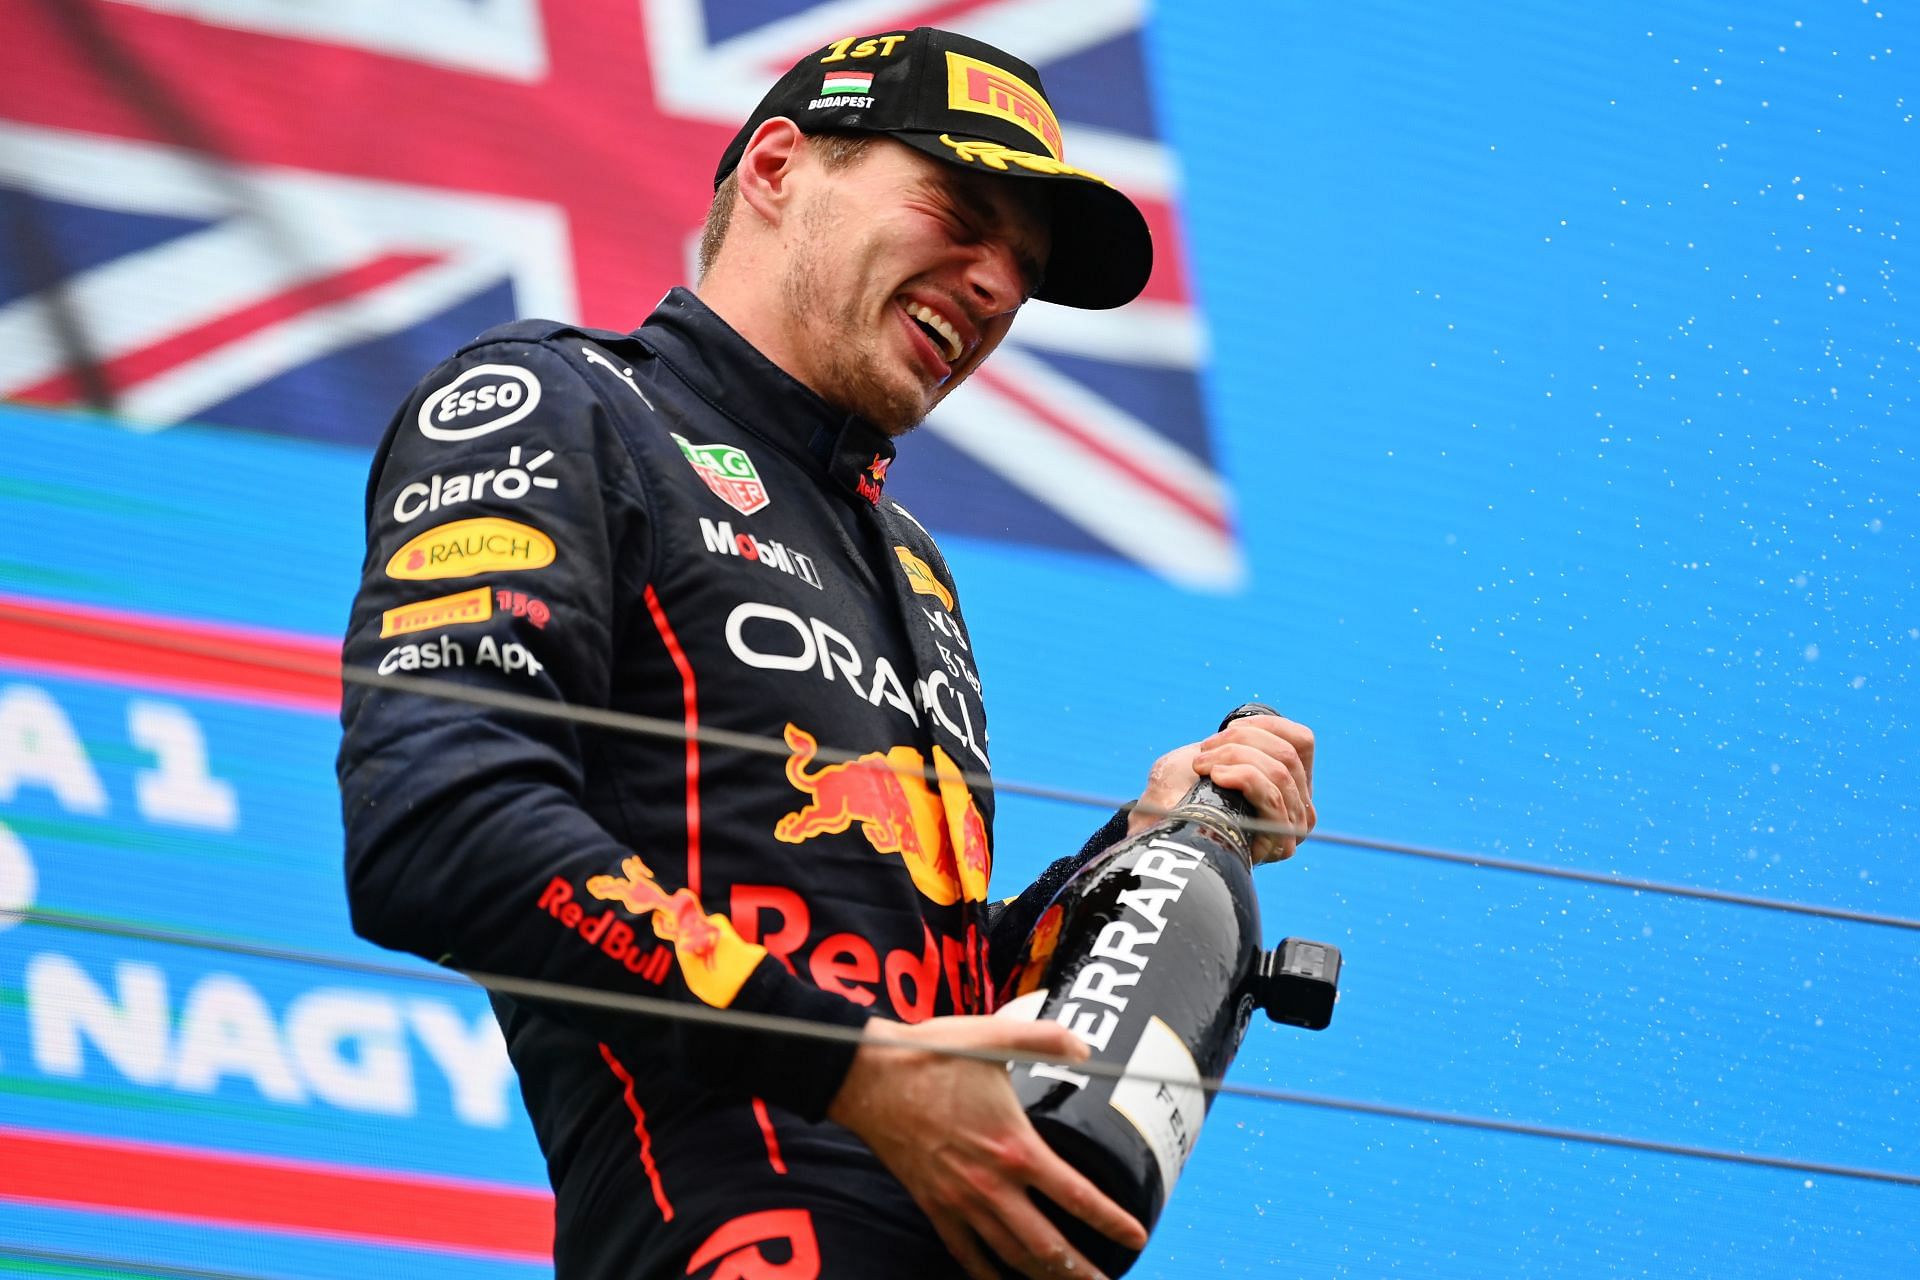 F1 Grand Prix of Hungary - Max Verstappen wins at the Hungaroring